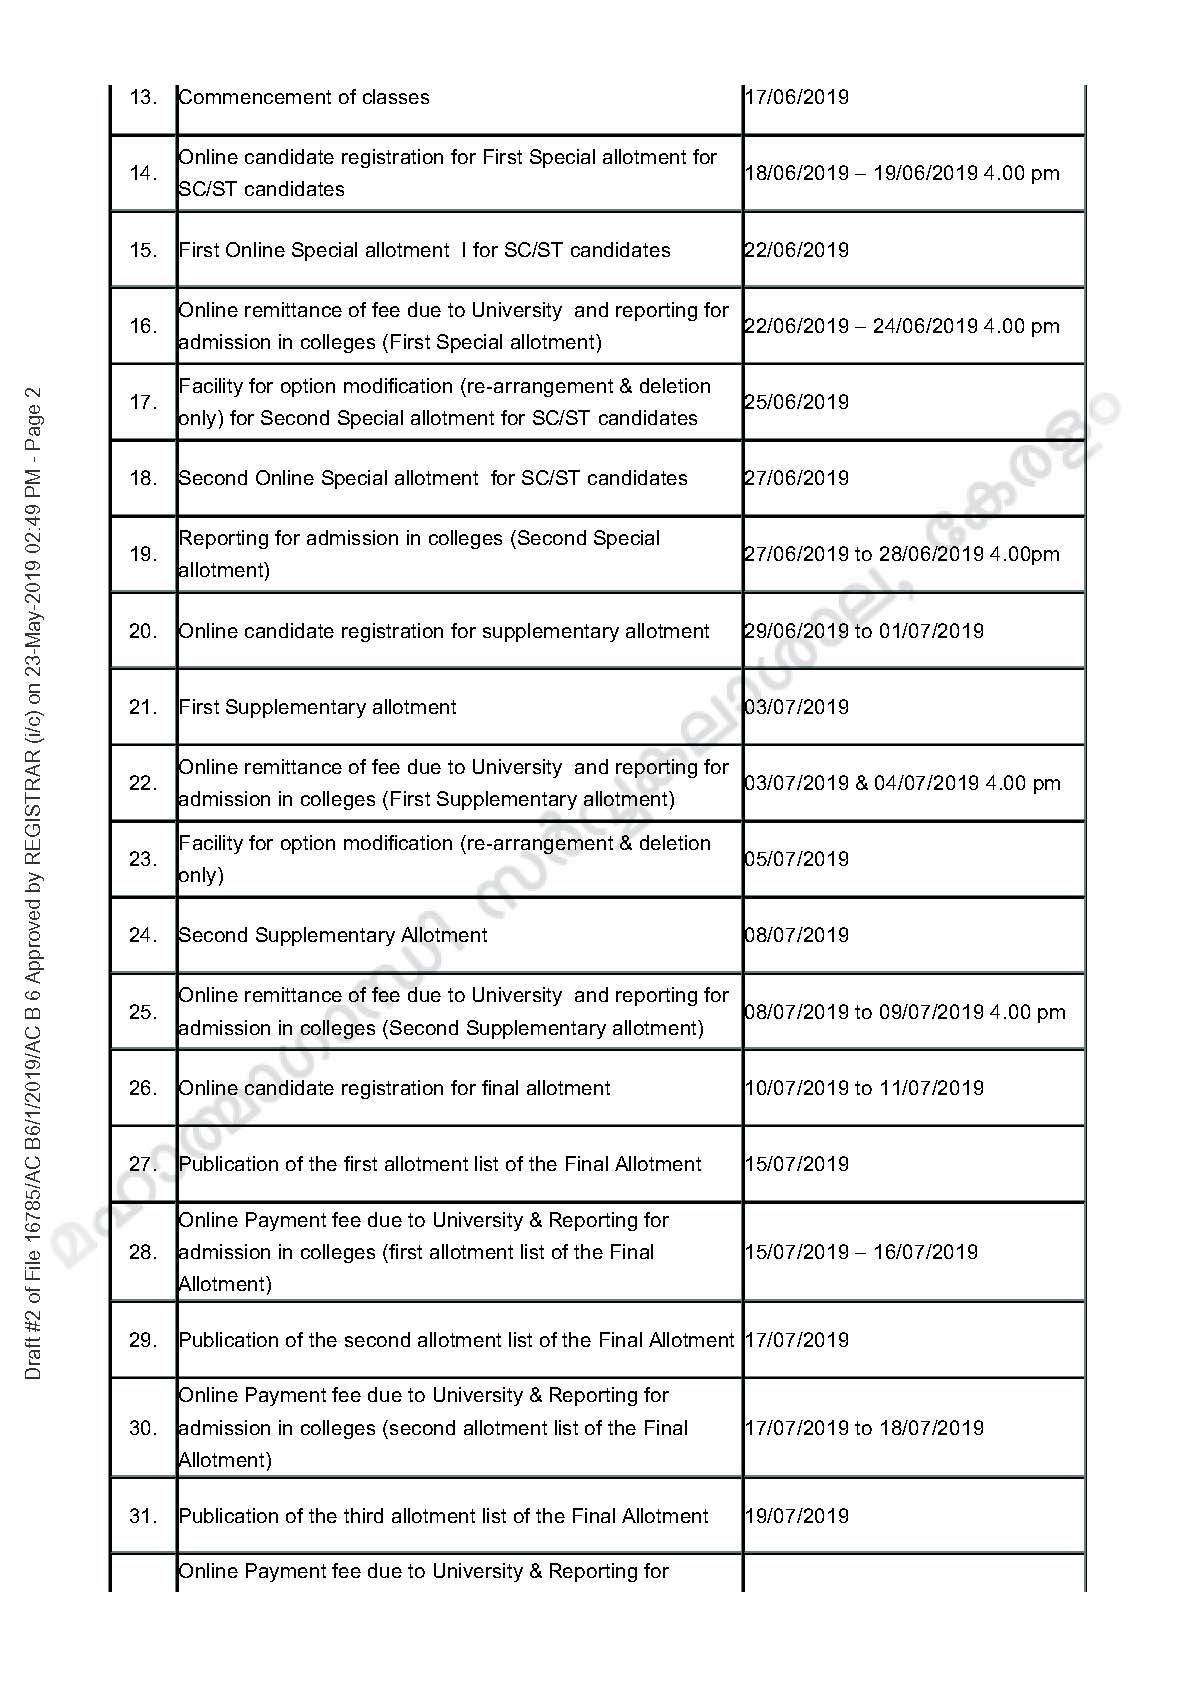 MG University Kerala Admission Schedule 2019 2020 - Notification Image 2